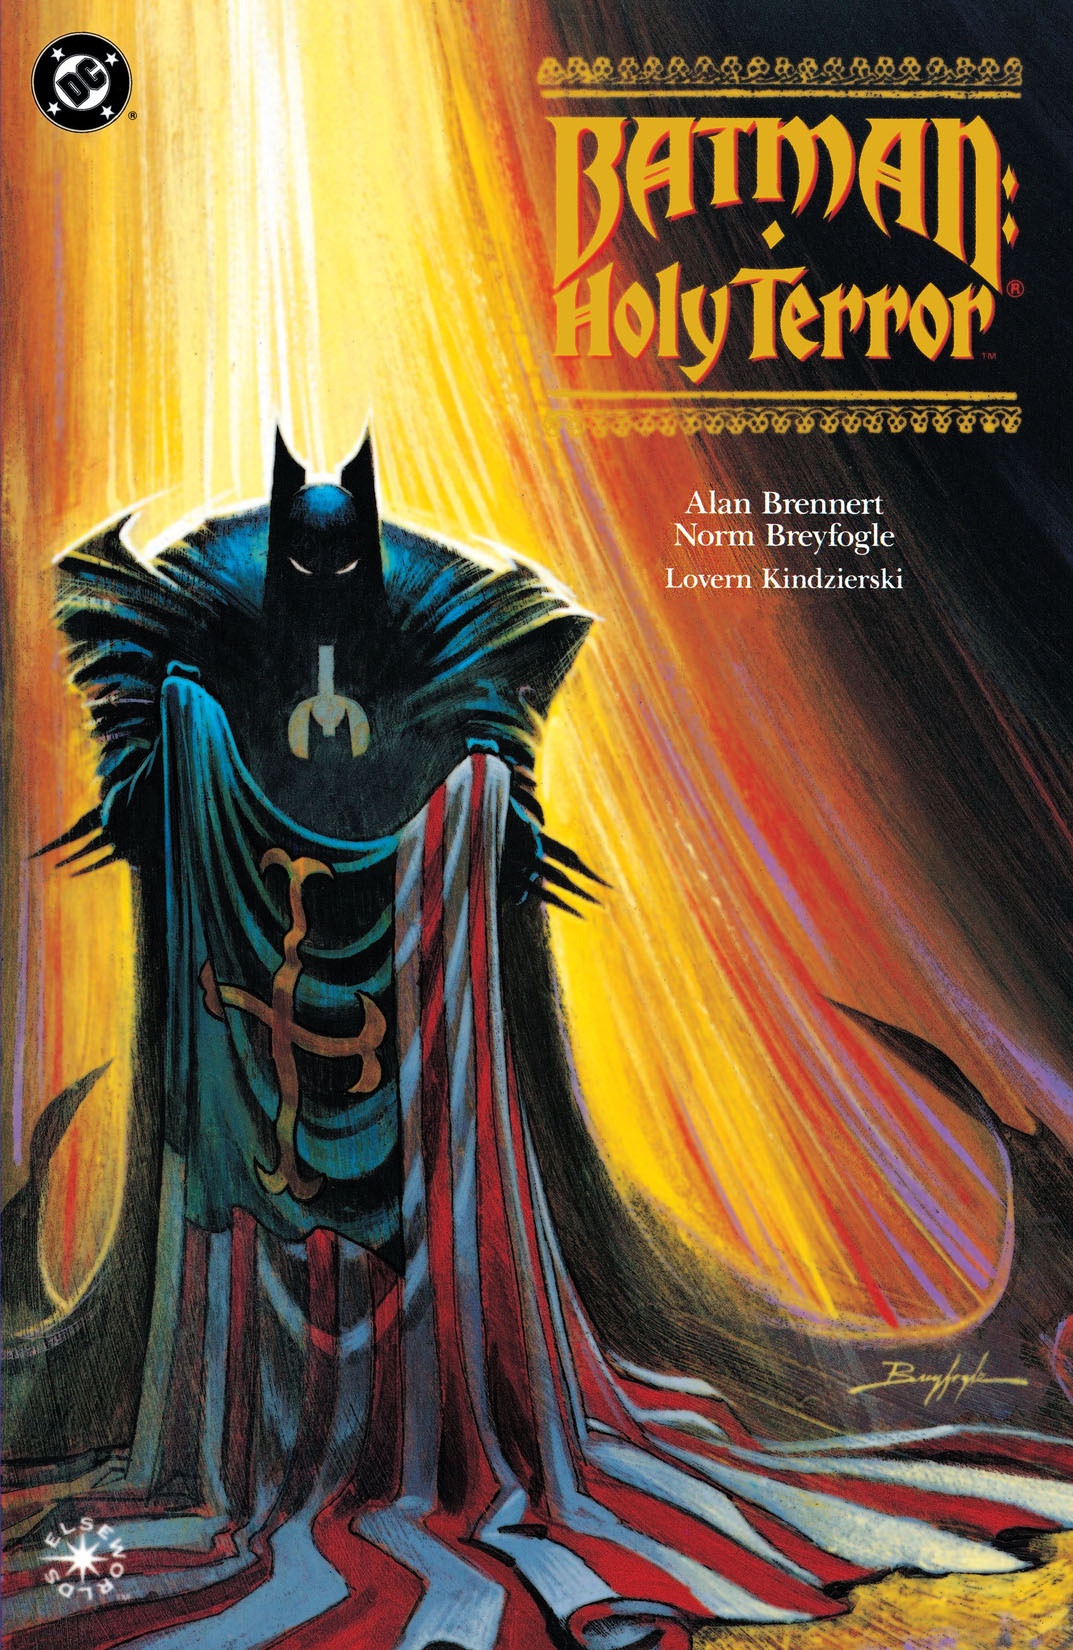 Batman: Holy Terror #1 preview images